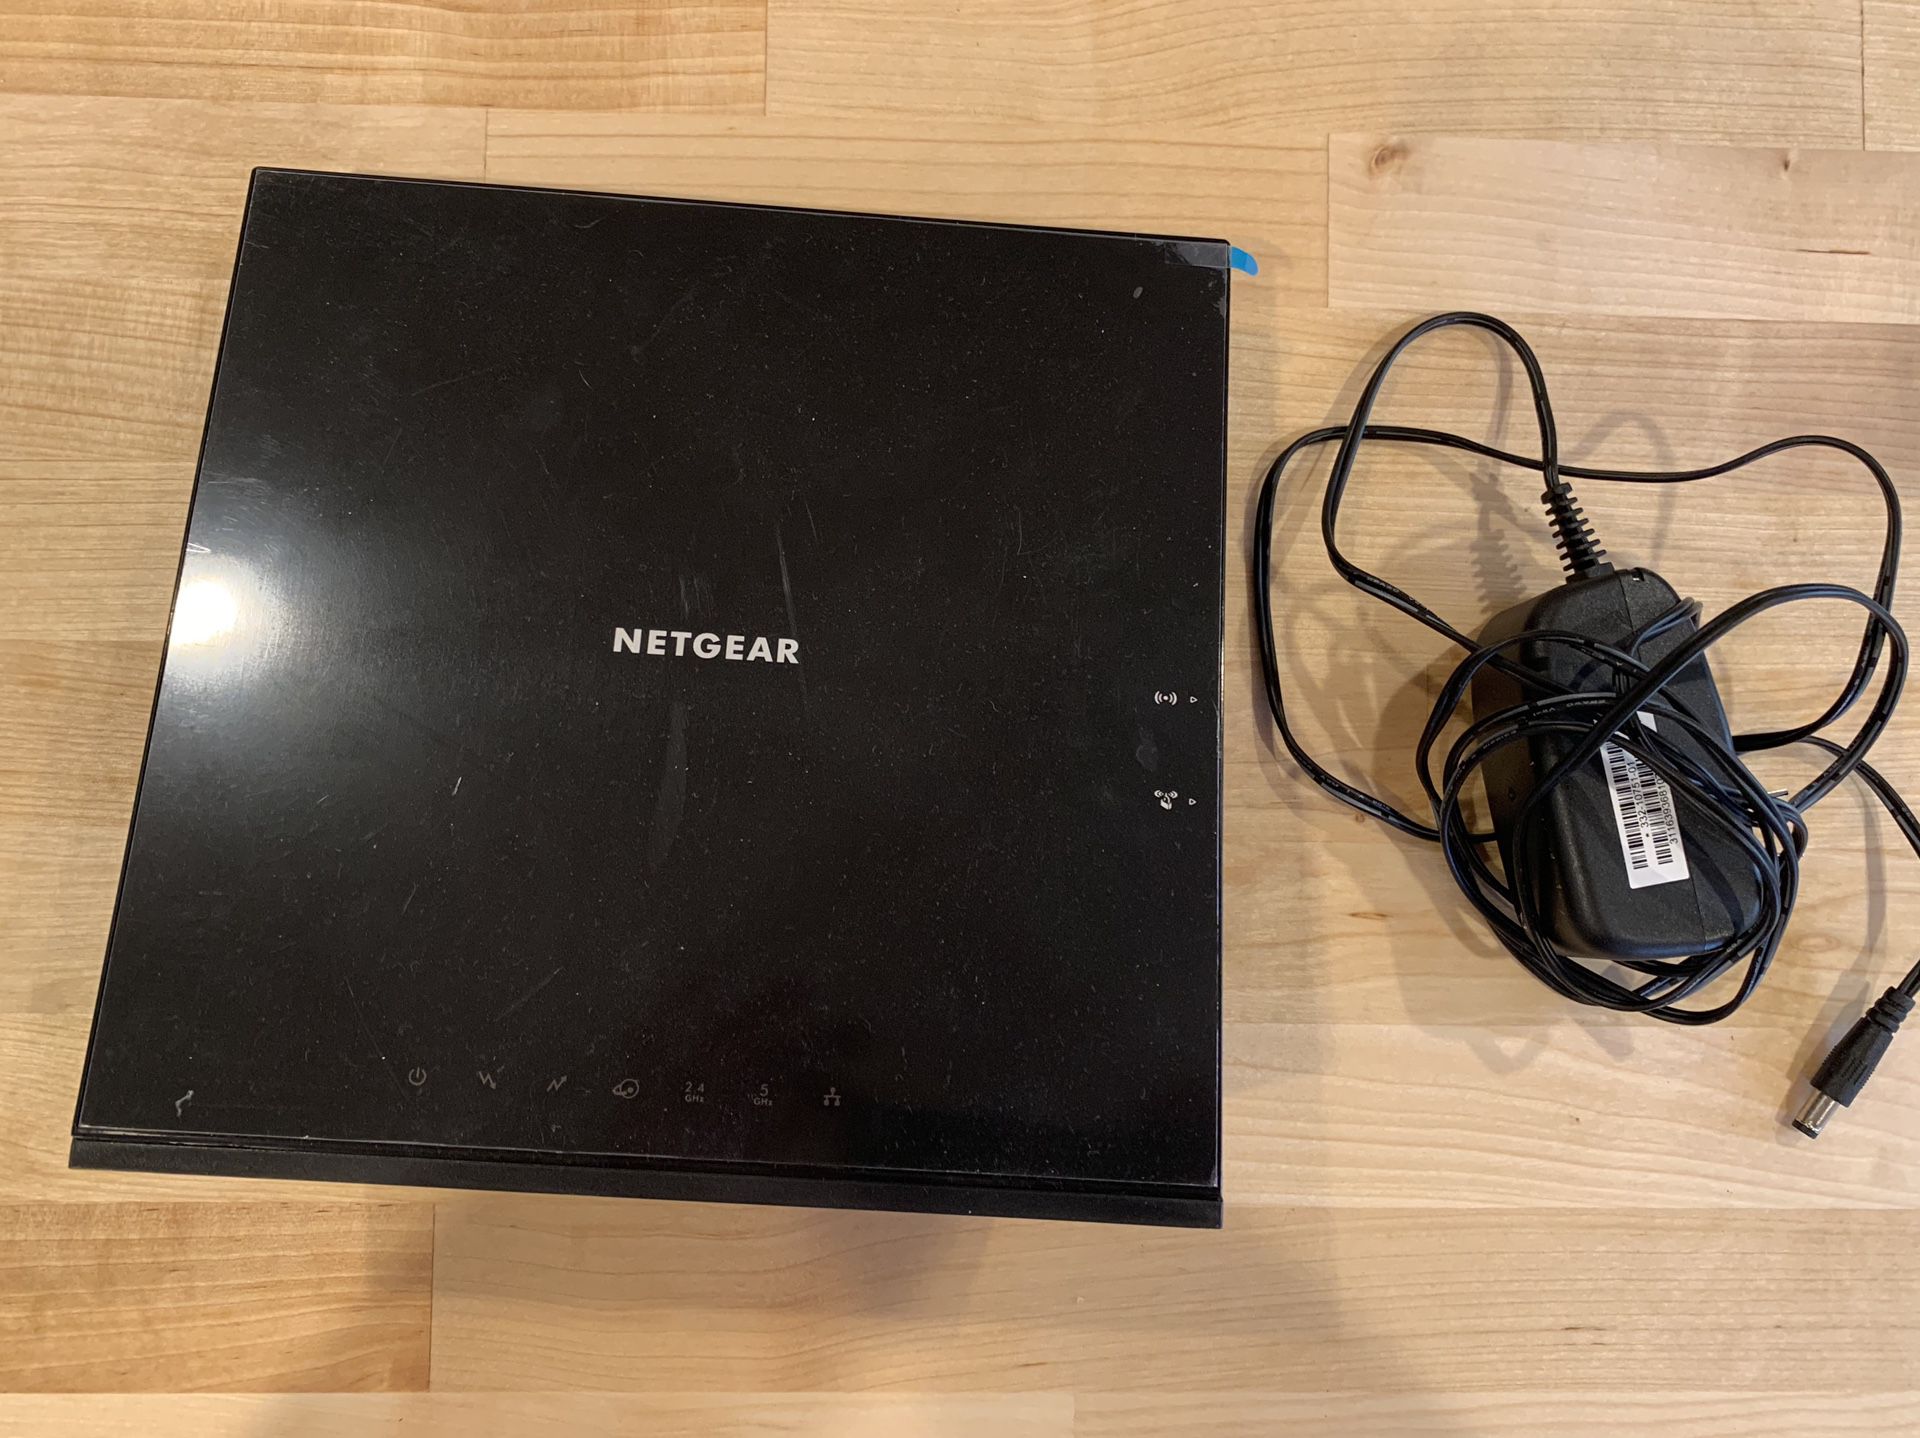 Netgear AC 1600 WiFi Cable Modem Router